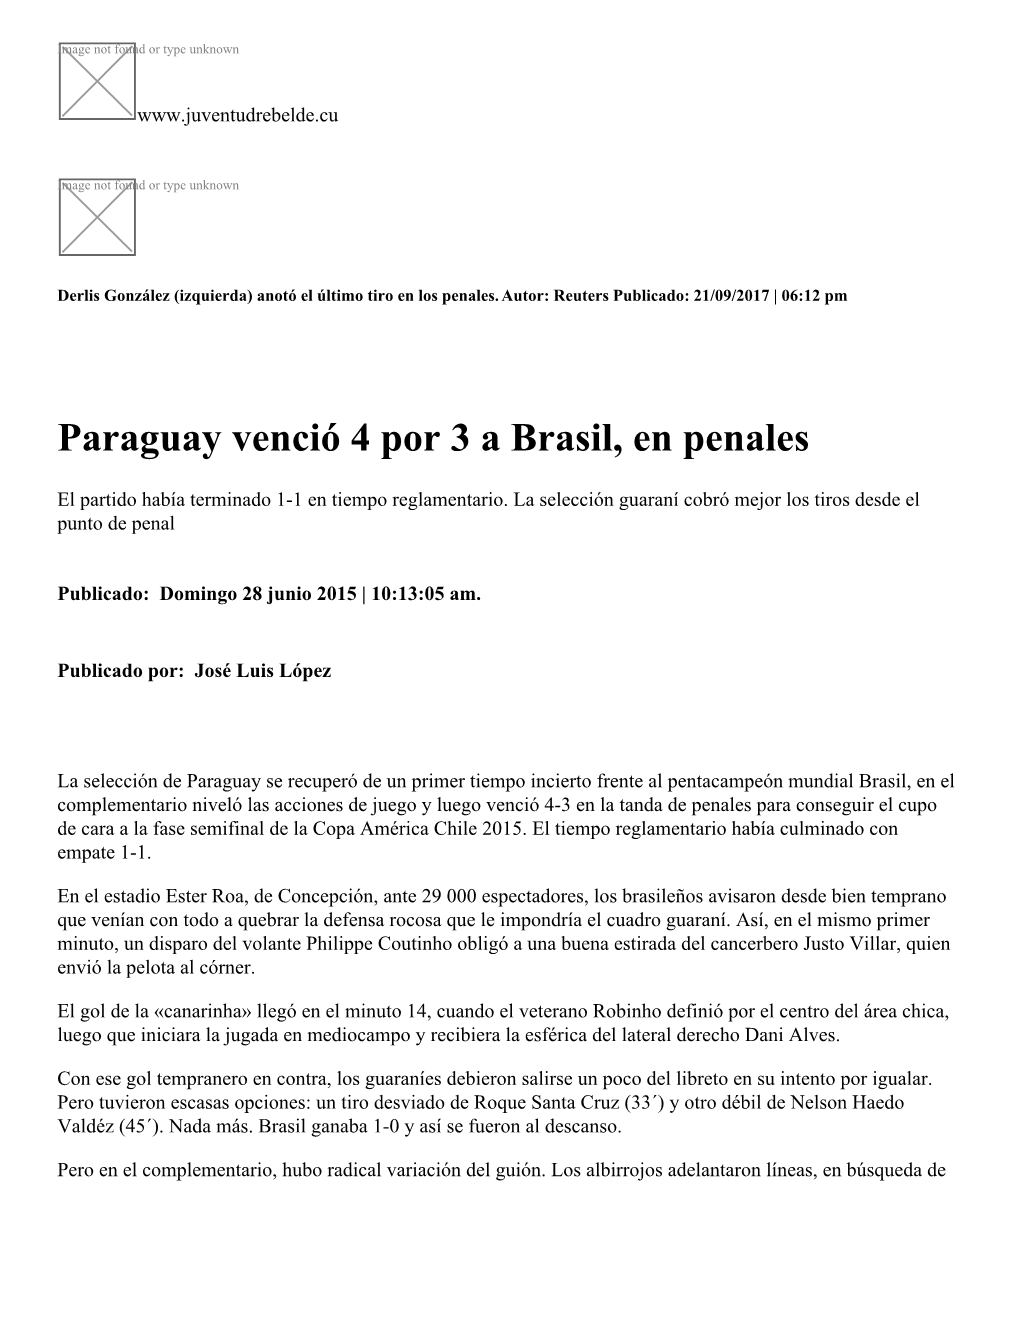 Paraguay Venció 4 Por 3 a Brasil, En Penales